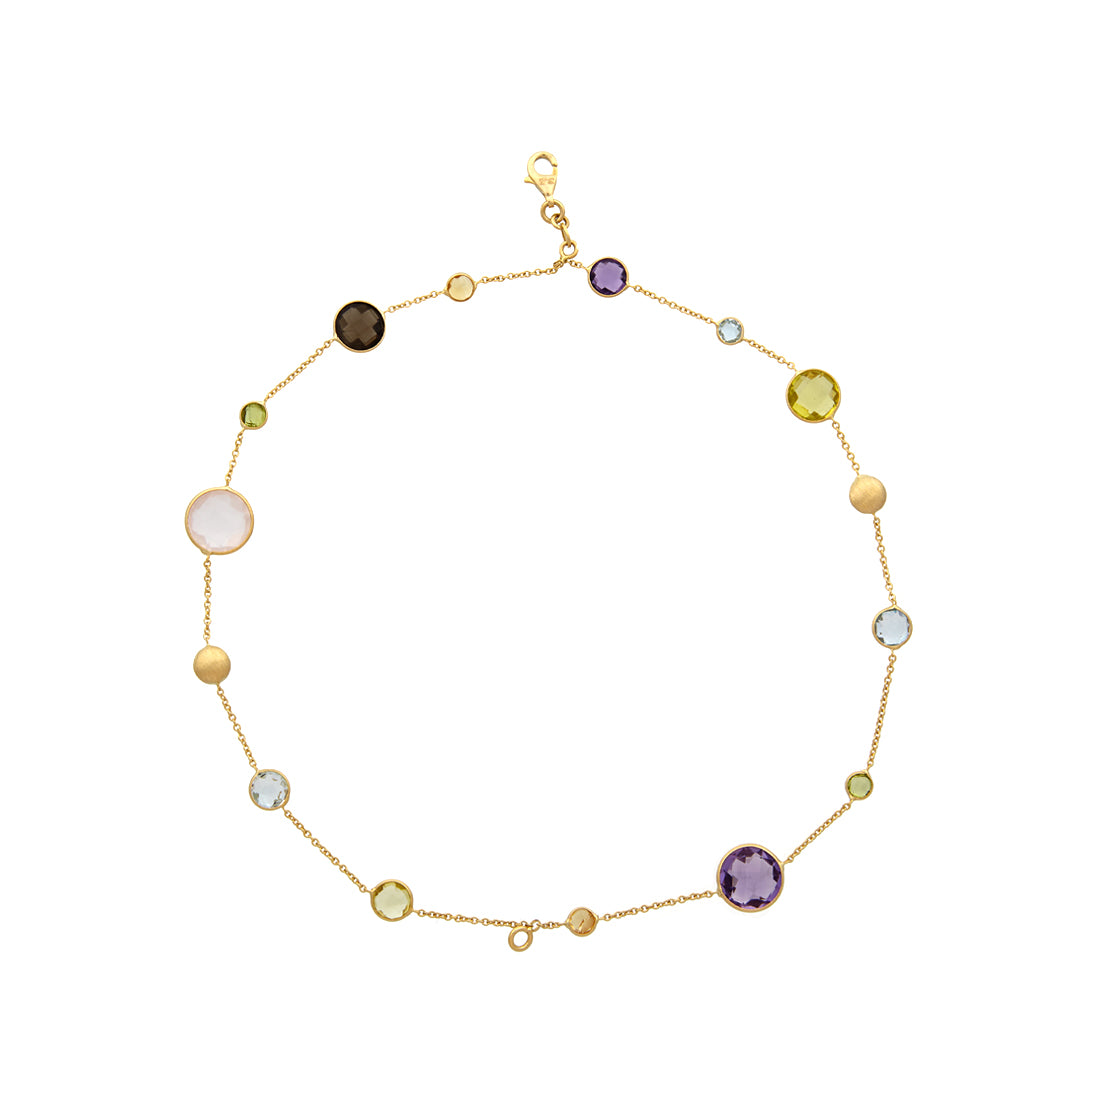 Yellow gold bracelet with various gemstones